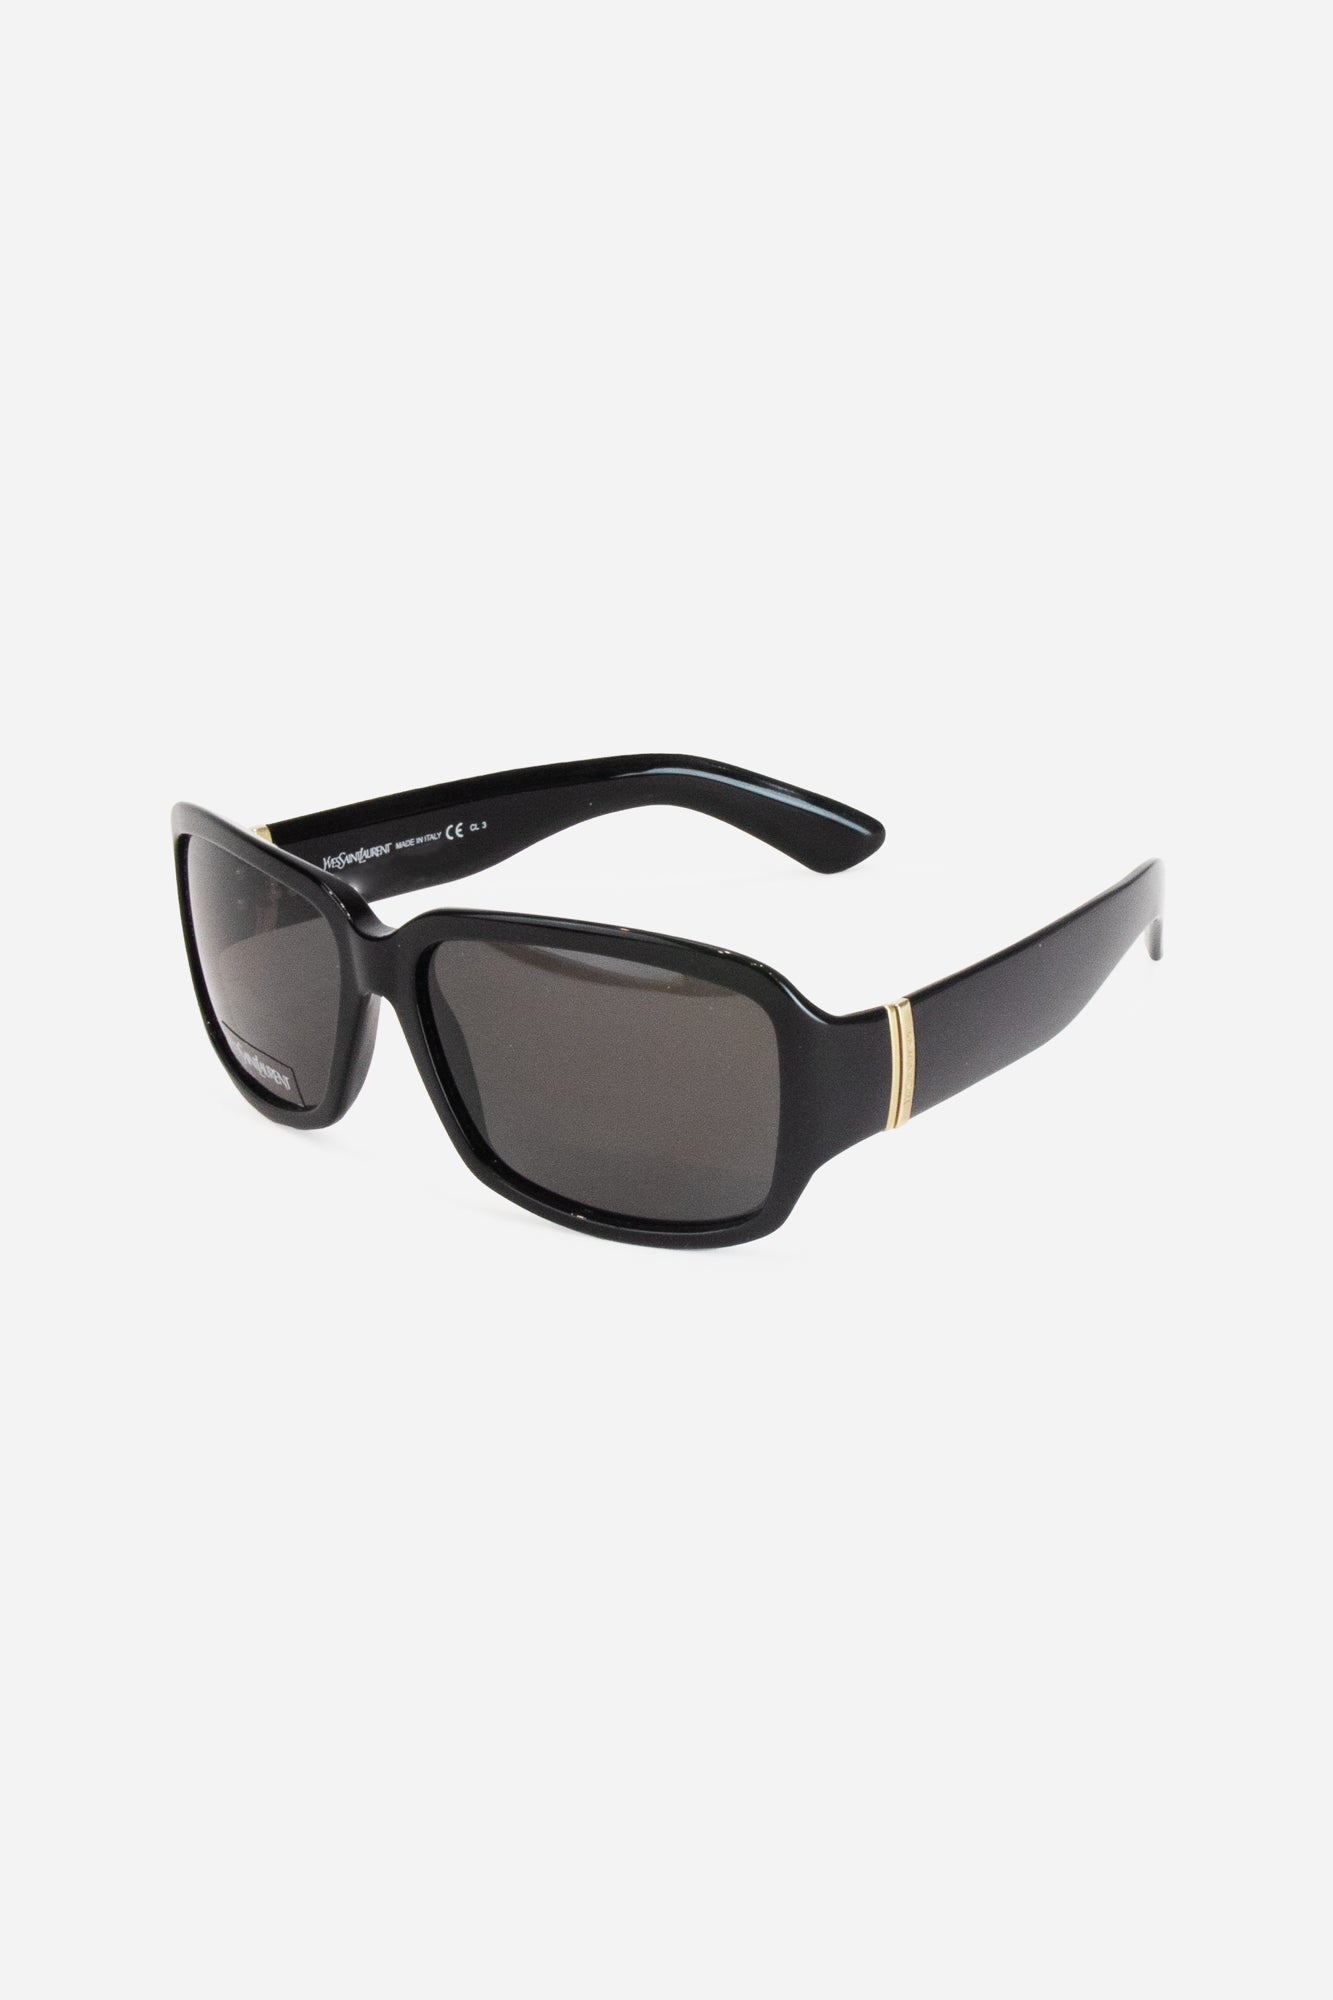 Black Sunglasses Gold Logo On Arm